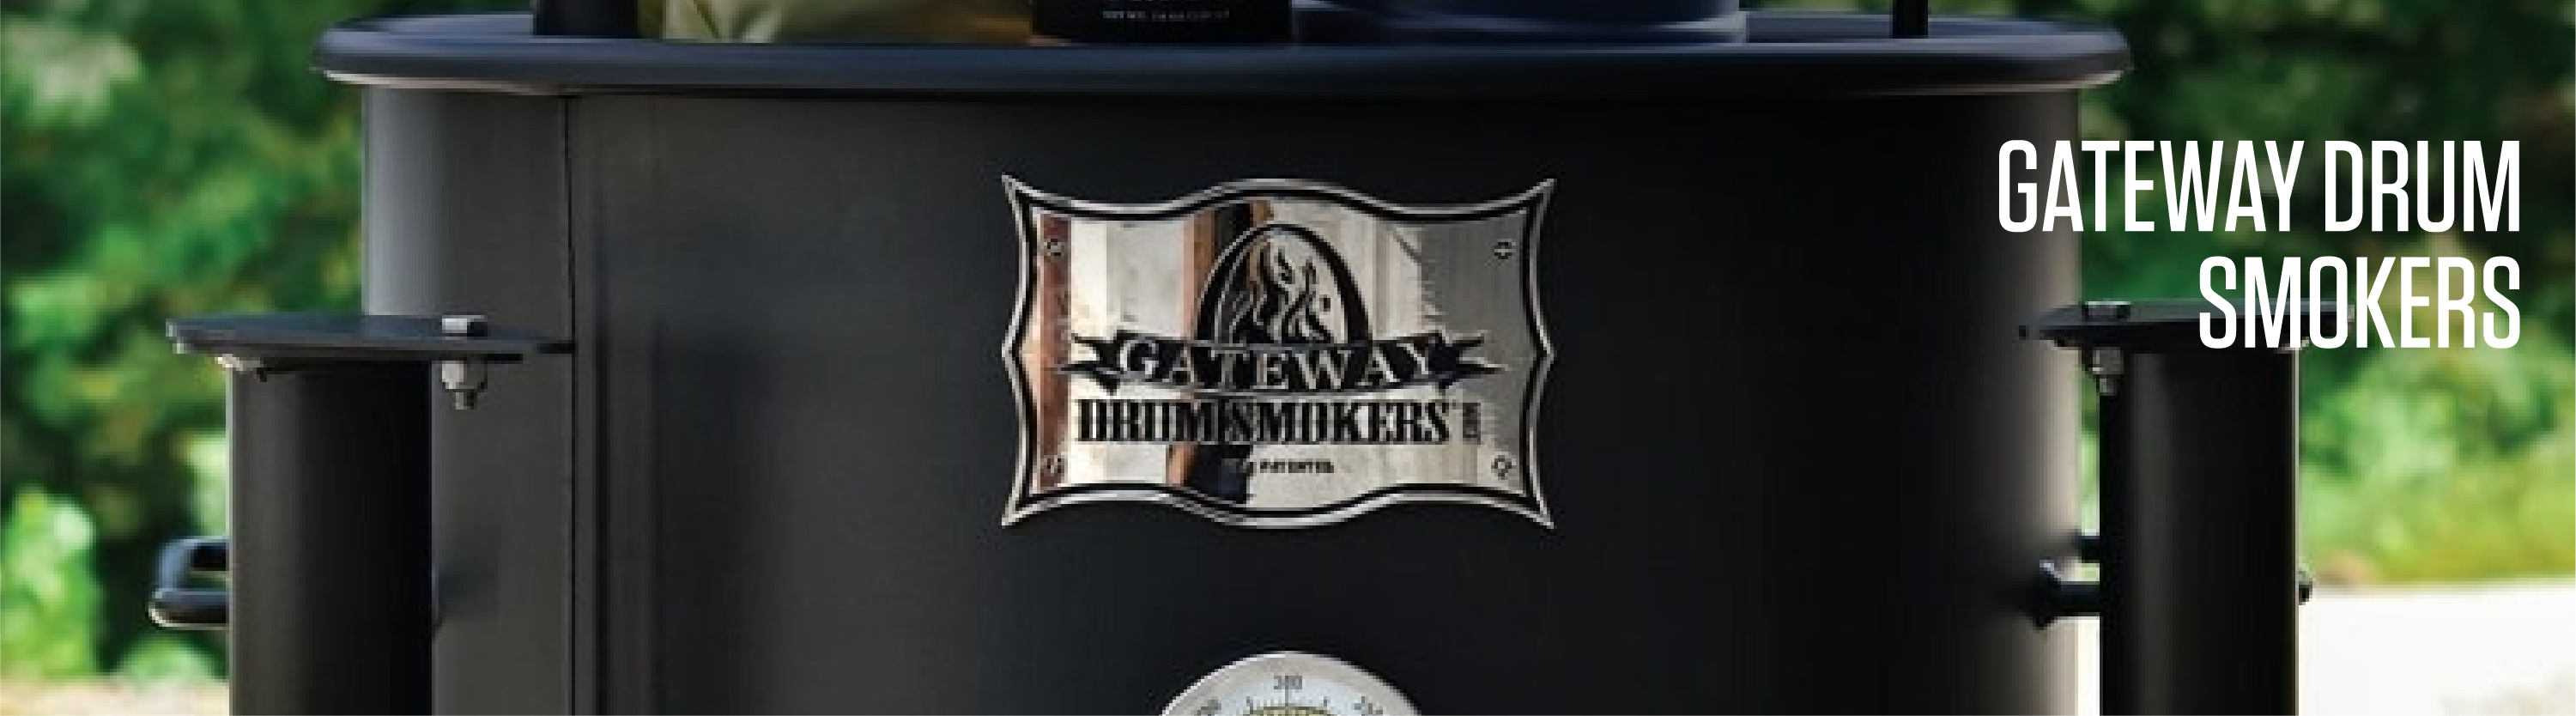 Gateway Drum Smokers Header